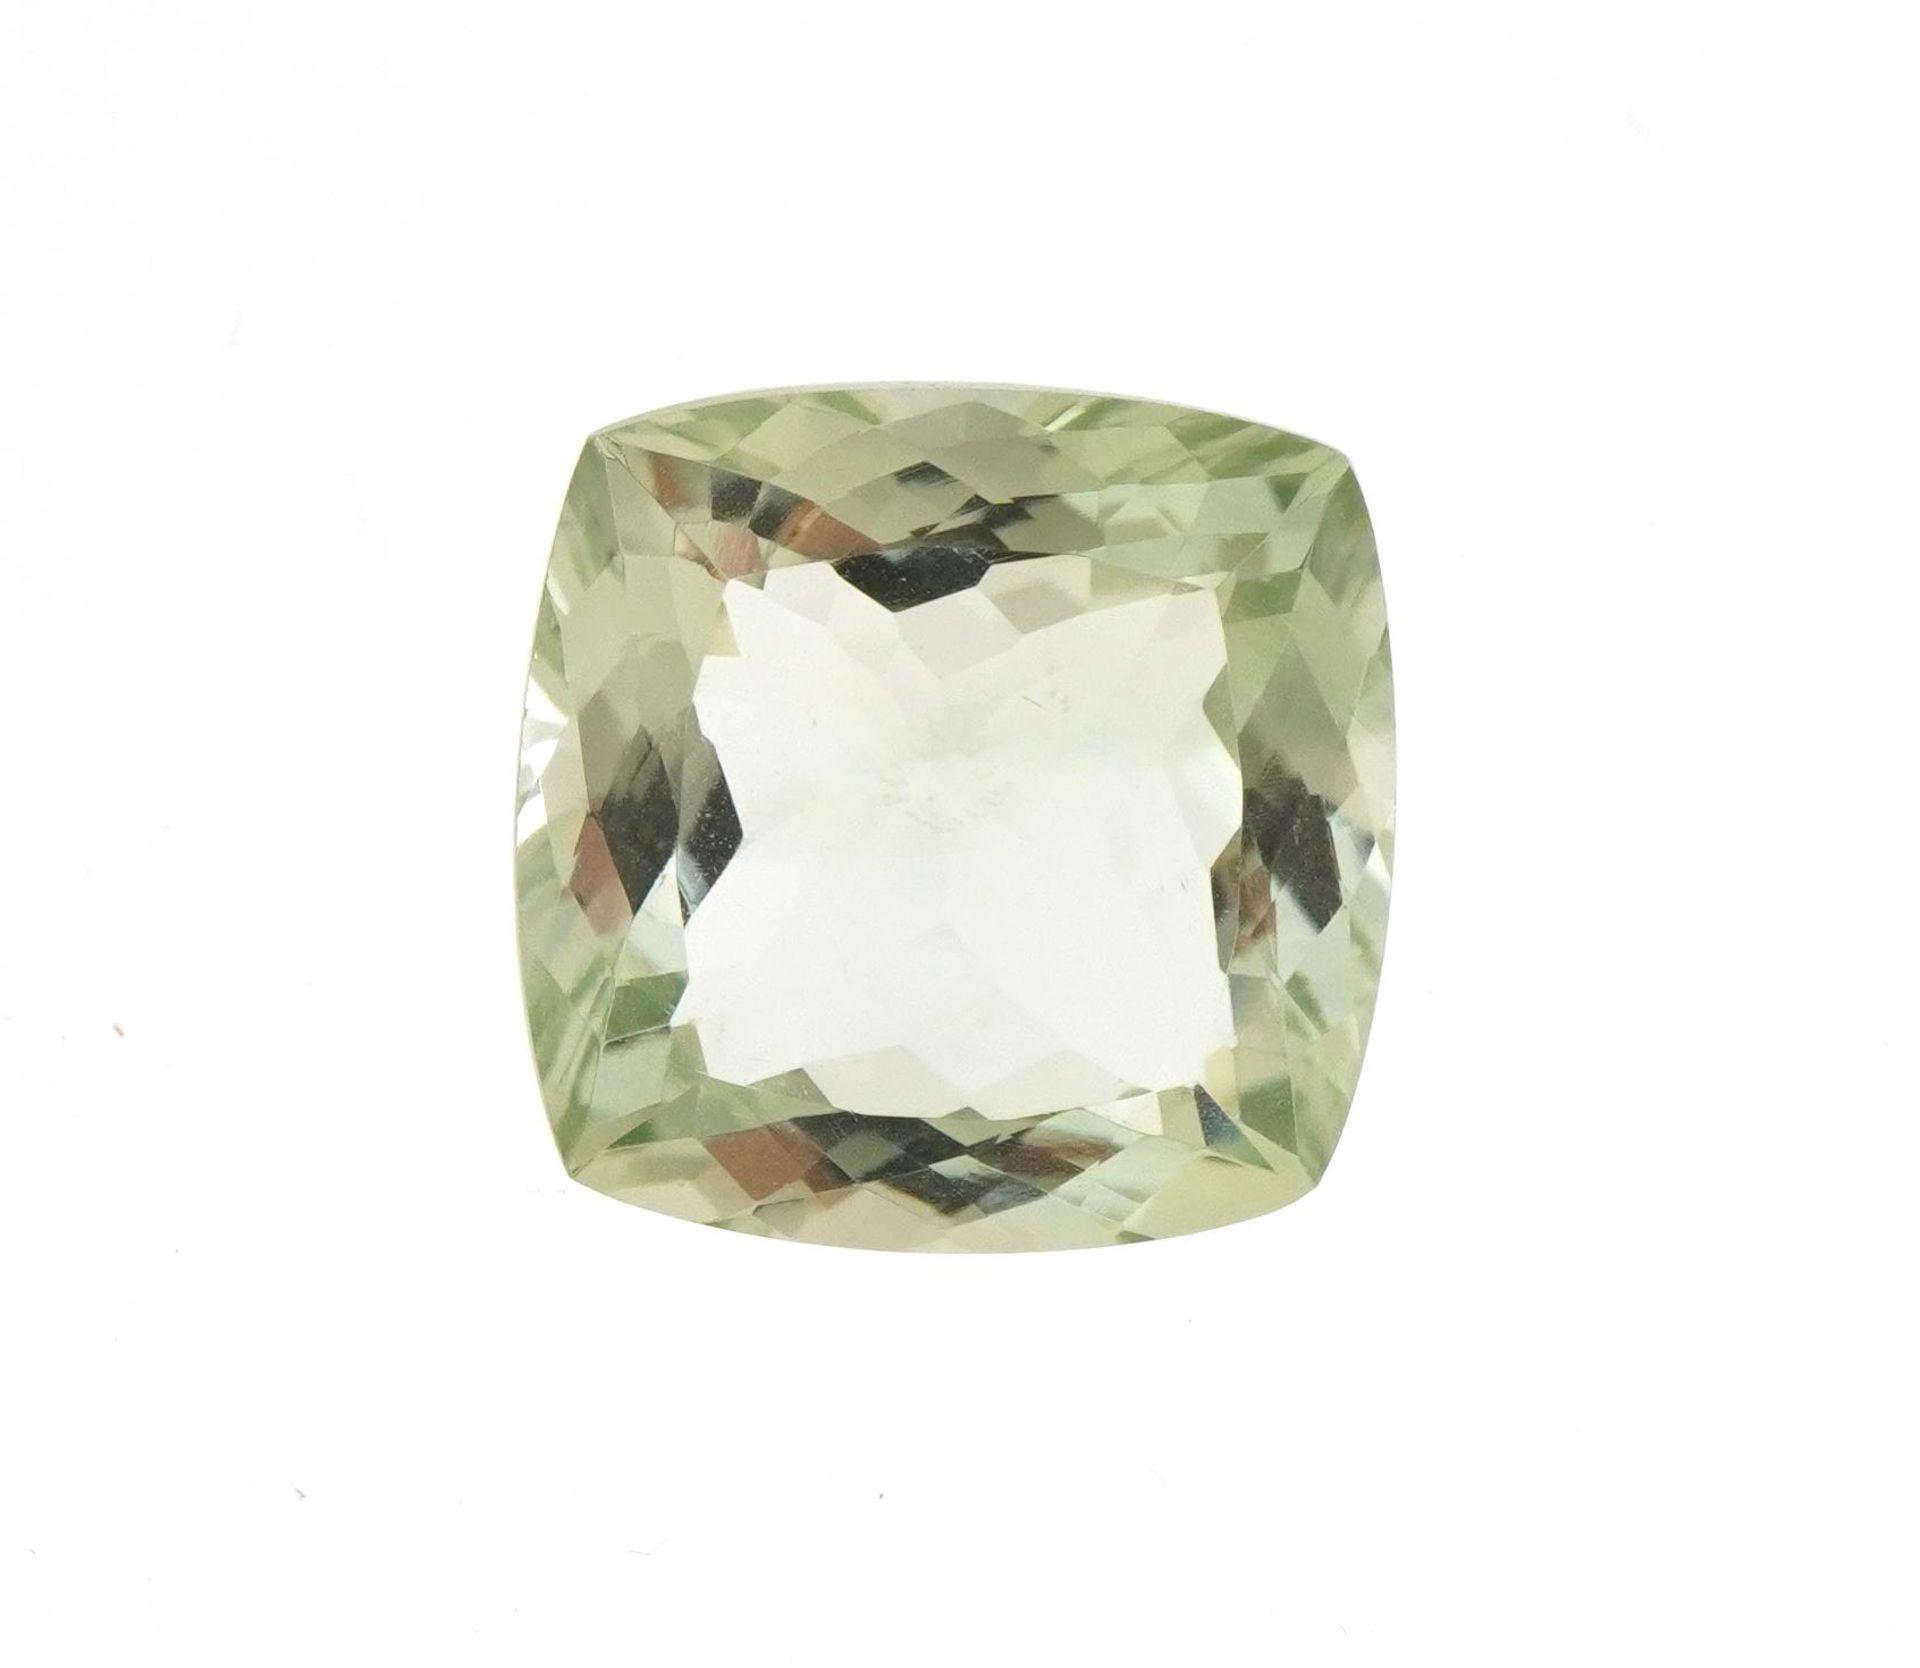 Cushion shape green amethyst, 15.66 carat - Image 2 of 2